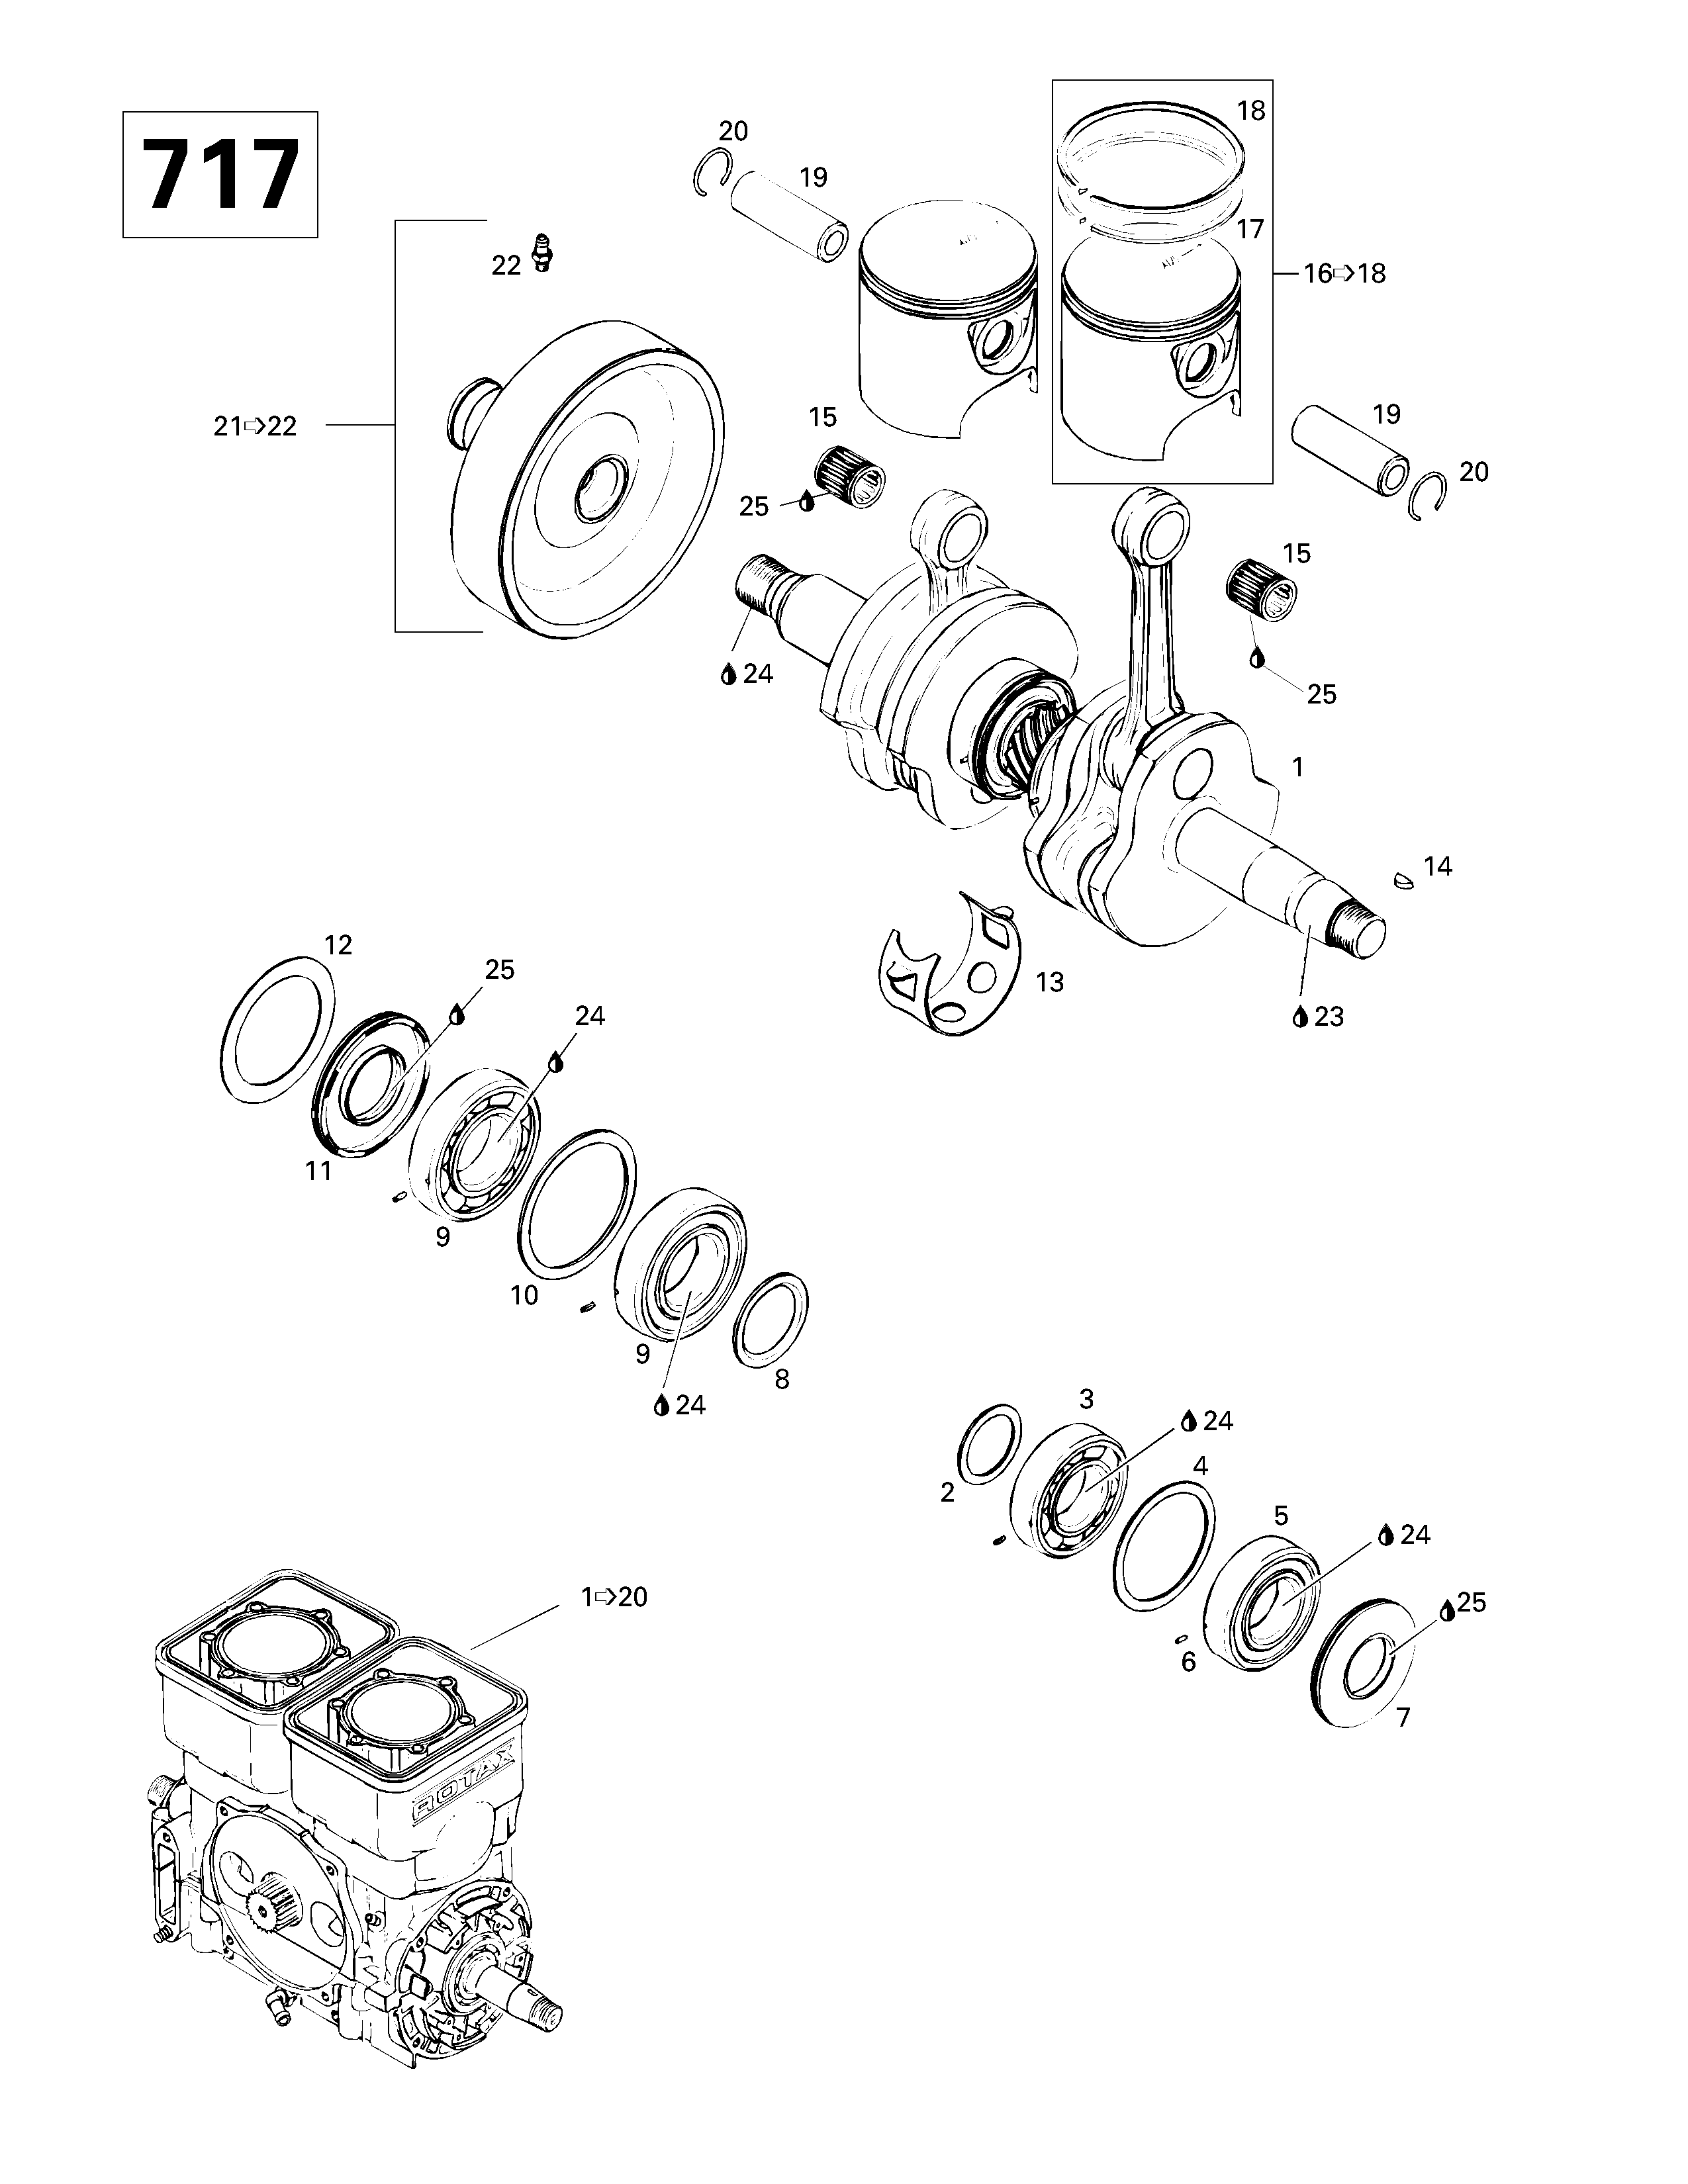 Crankshaft And Pistons (717)